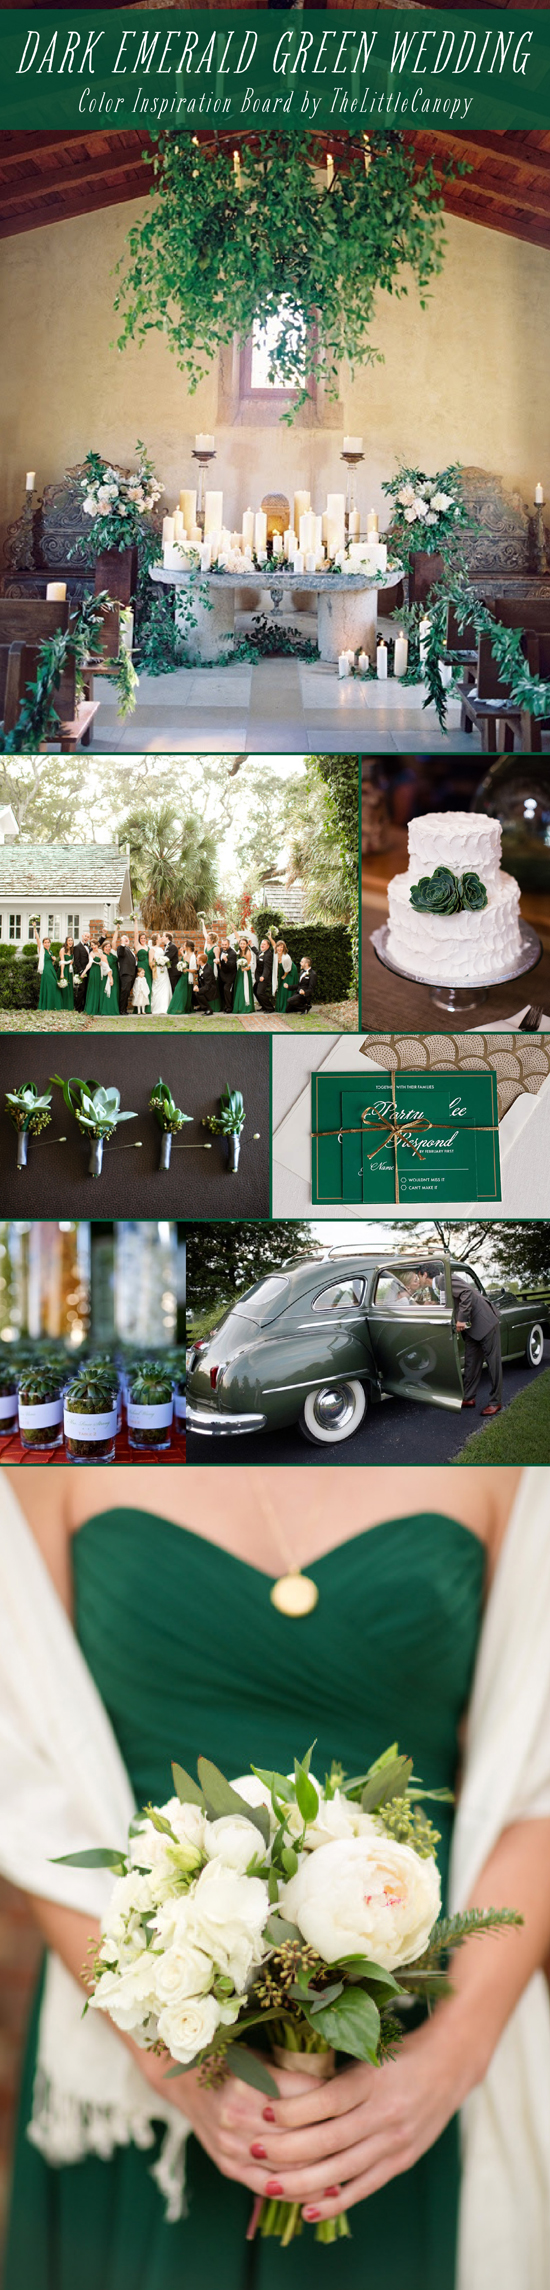 wedding-inspiration-board-dark-emerald-green-color-theme